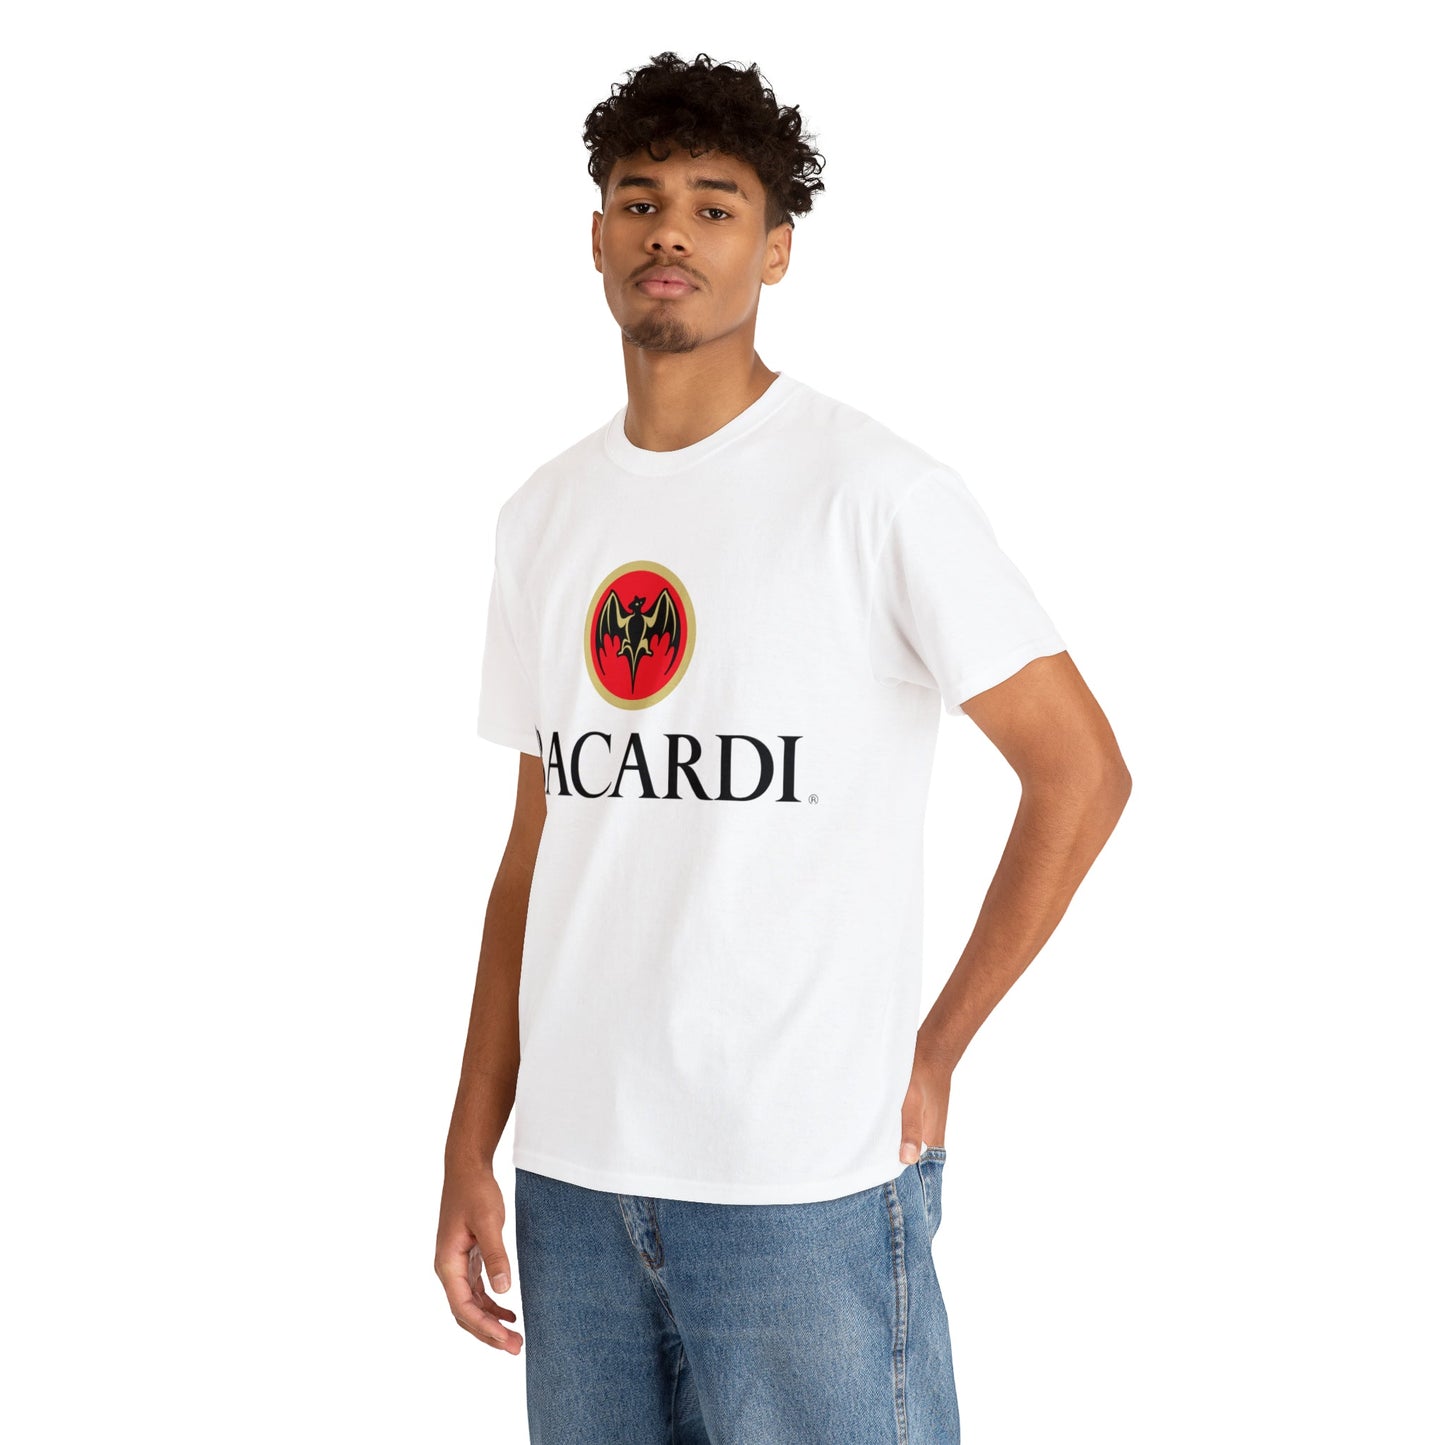 Bacardi Logo T-Shirt - RetroTeeShop